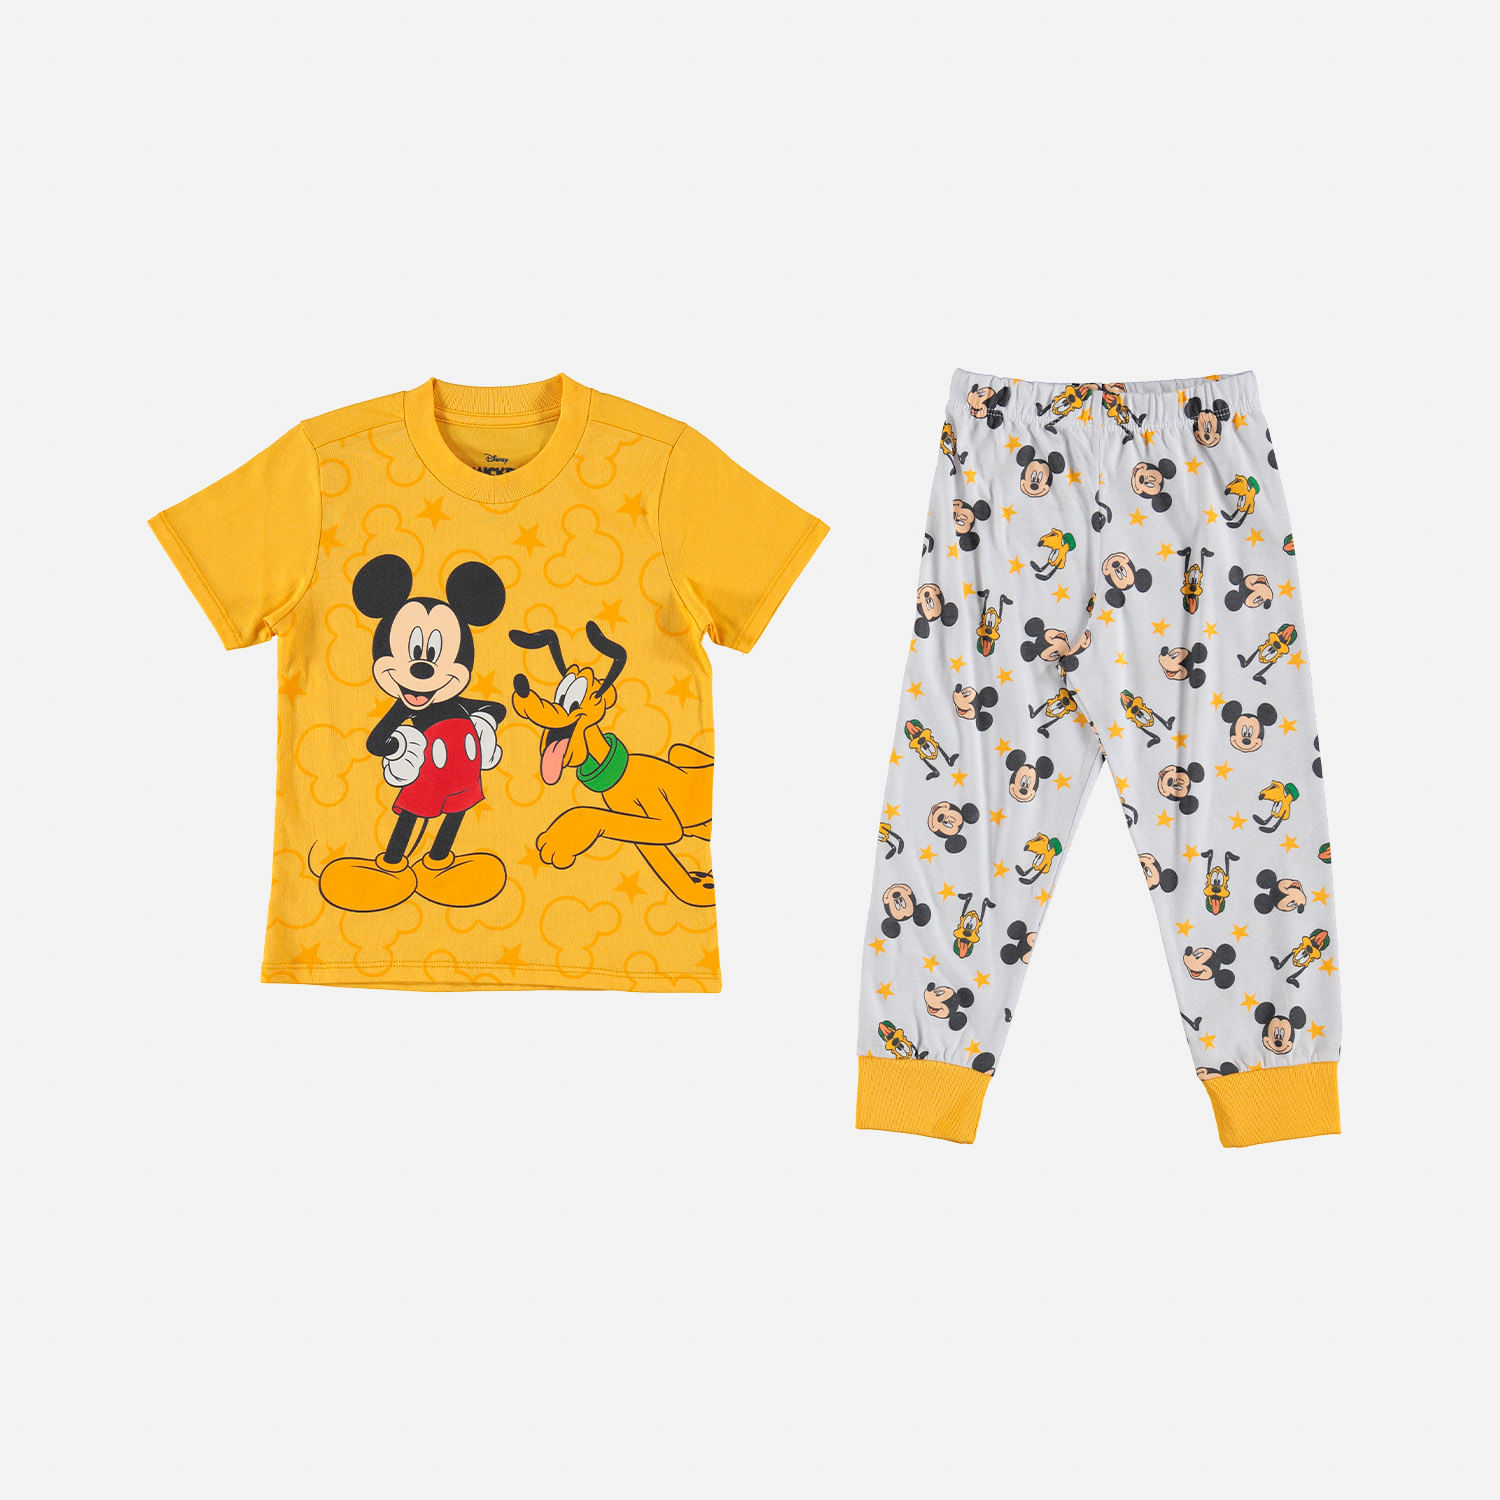 Pijama de niño, corta/pantalón largo de Mickey Mouse